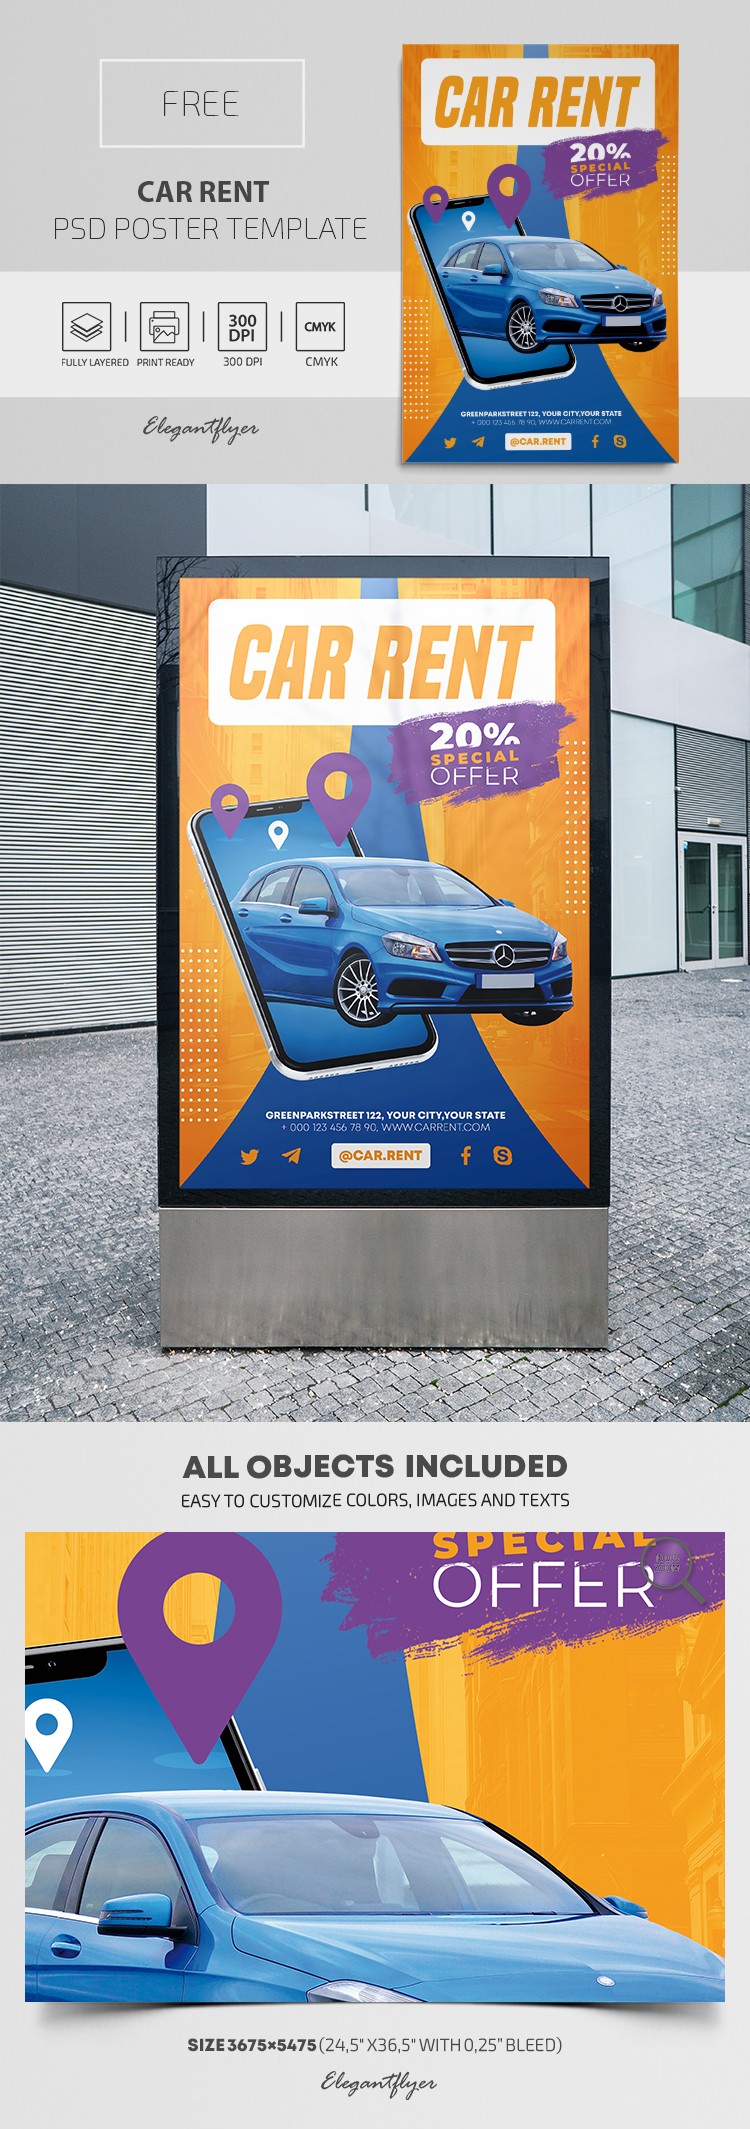 Car Rent Poster by ElegantFlyer